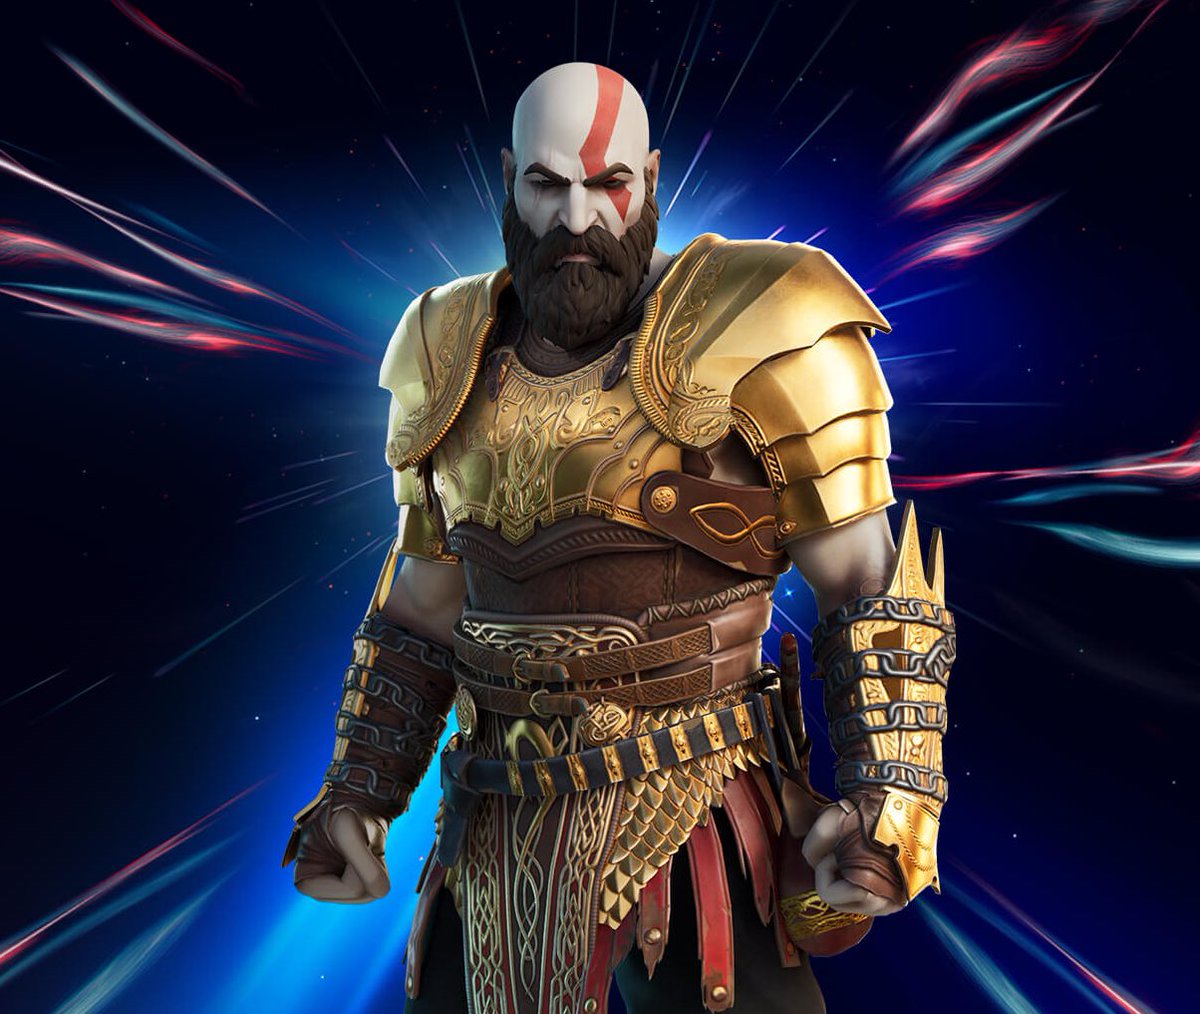 kratos returns april 31st btw